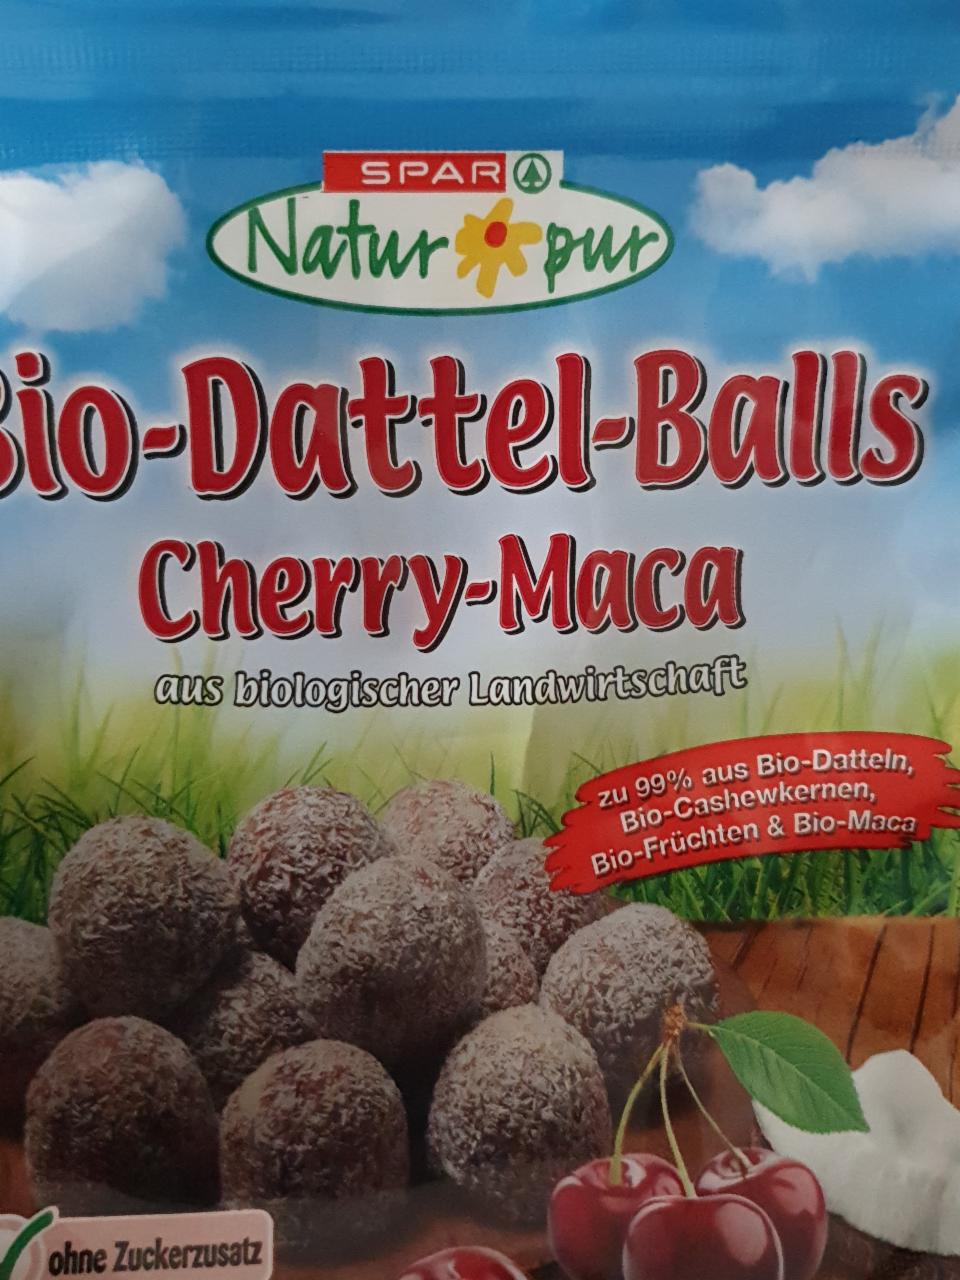 Fotografie - Bio-Dattel-Balls Cherry-Maca Spar Natur Pur